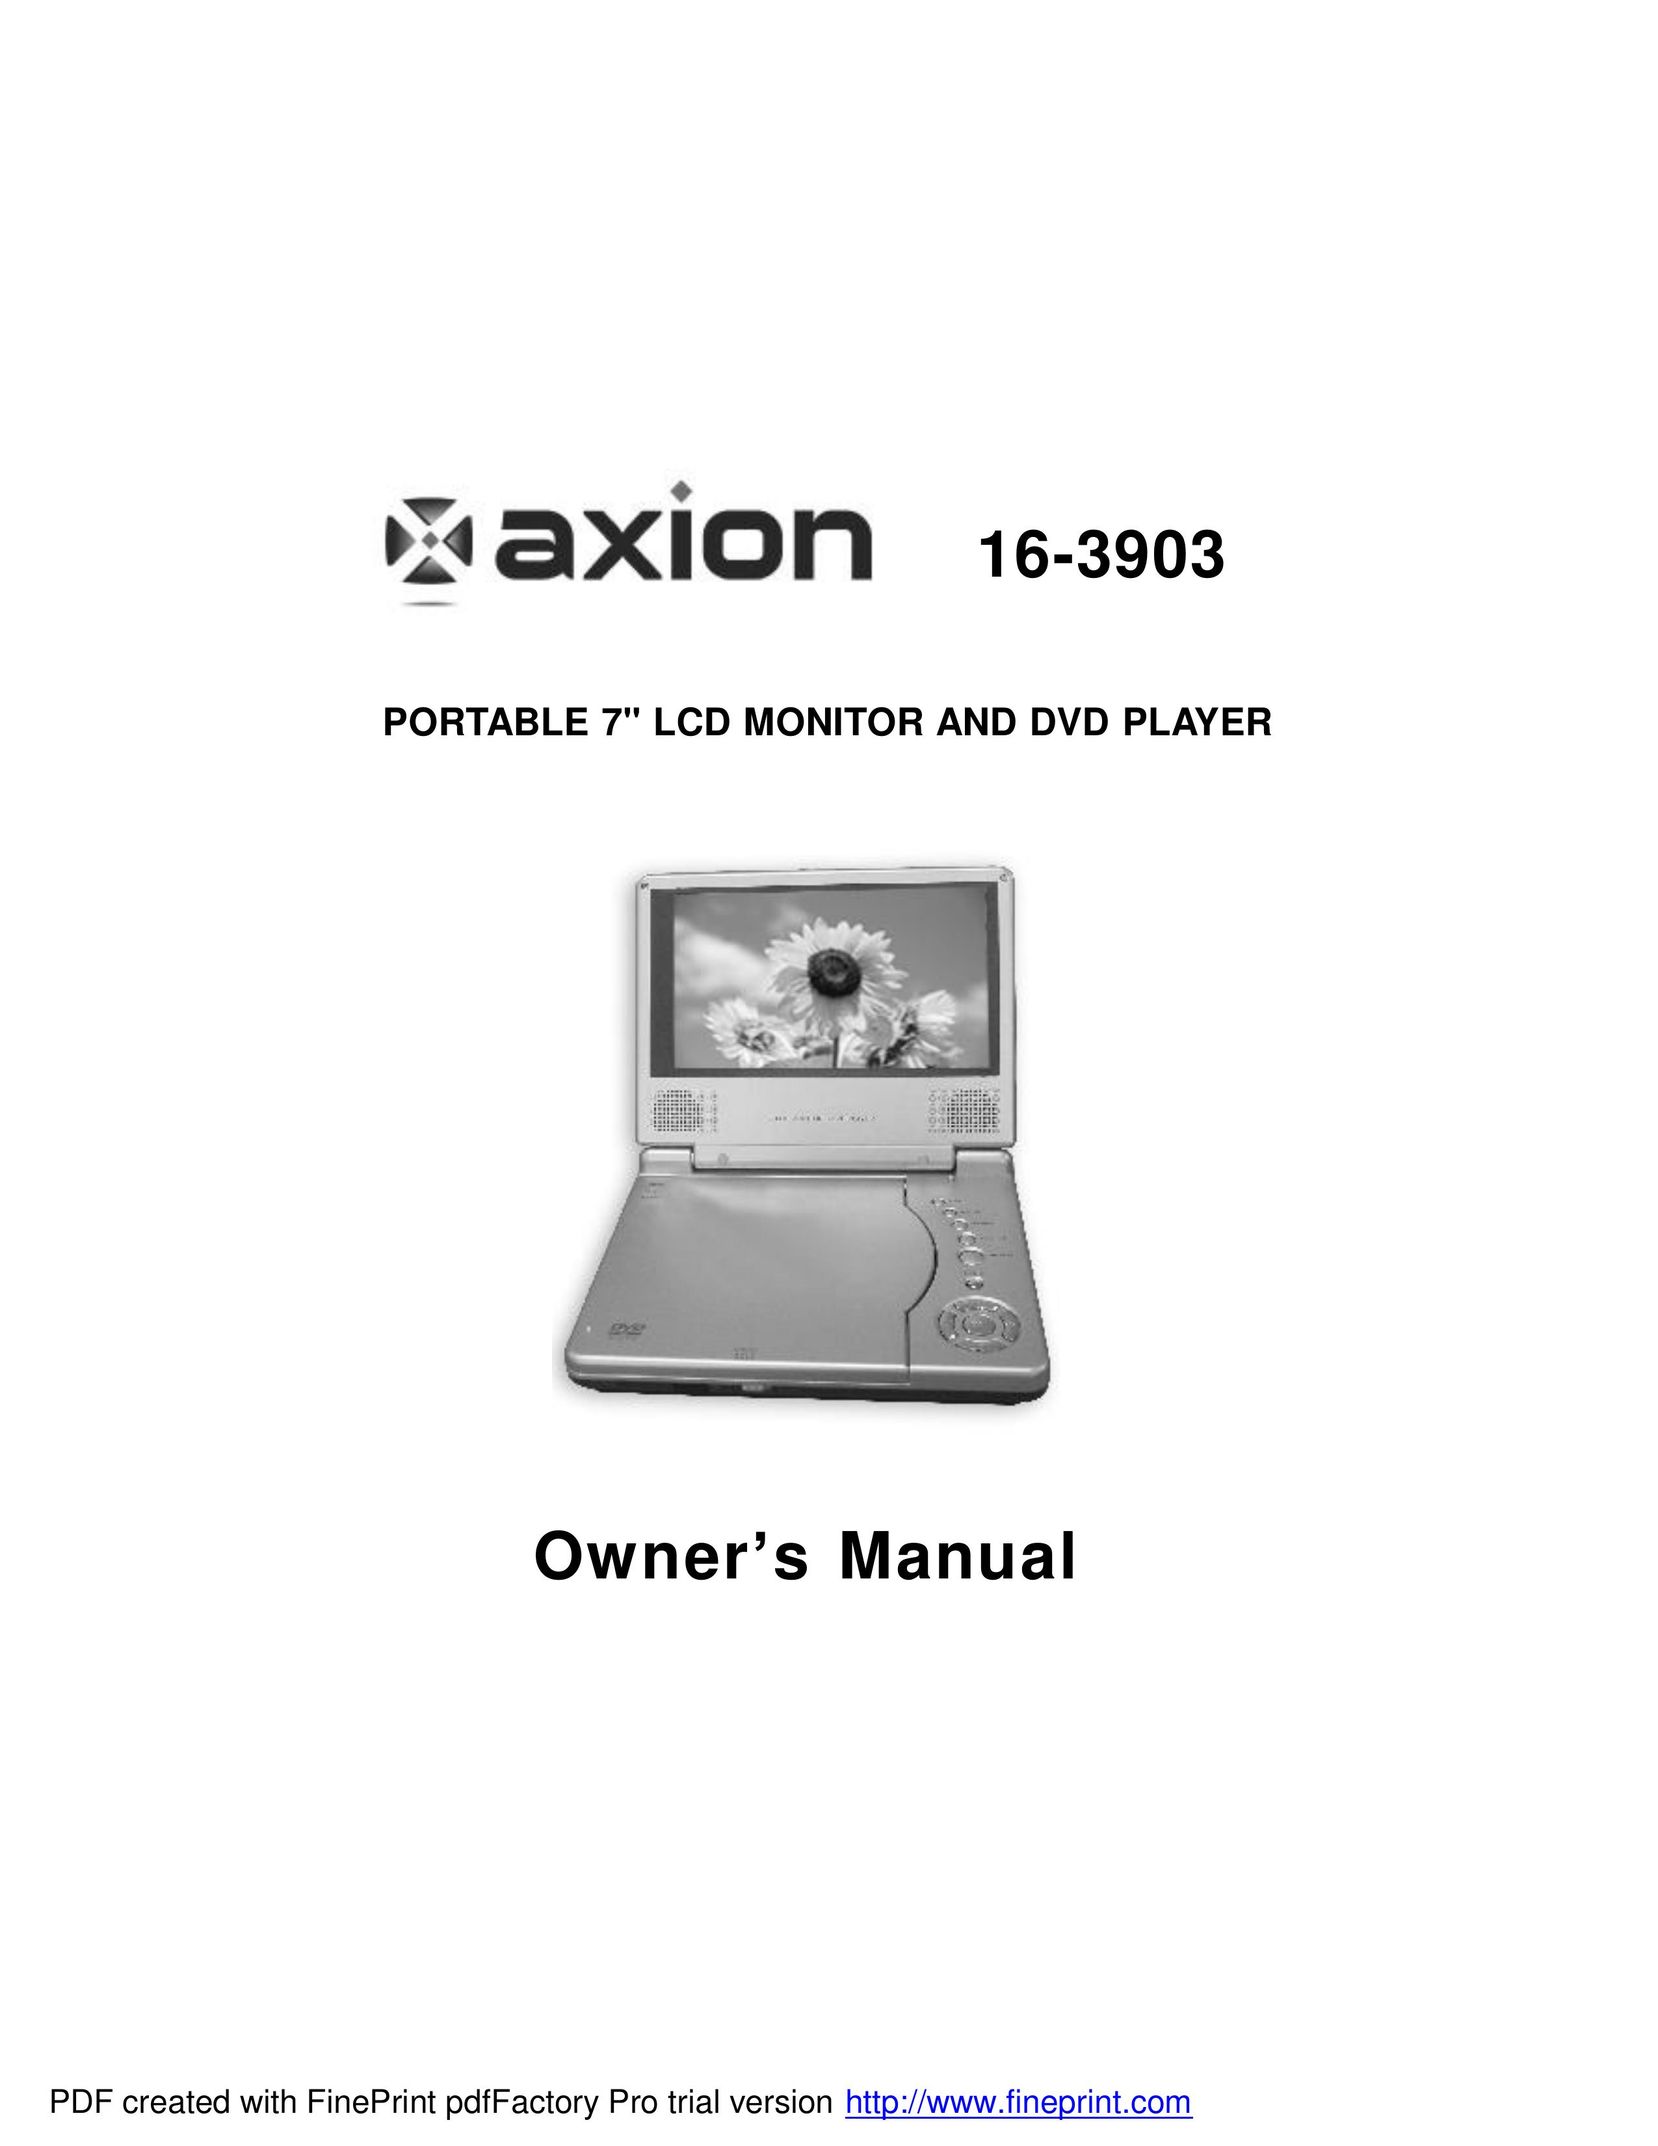 Axion 16-3903 Portable DVD Player User Manual